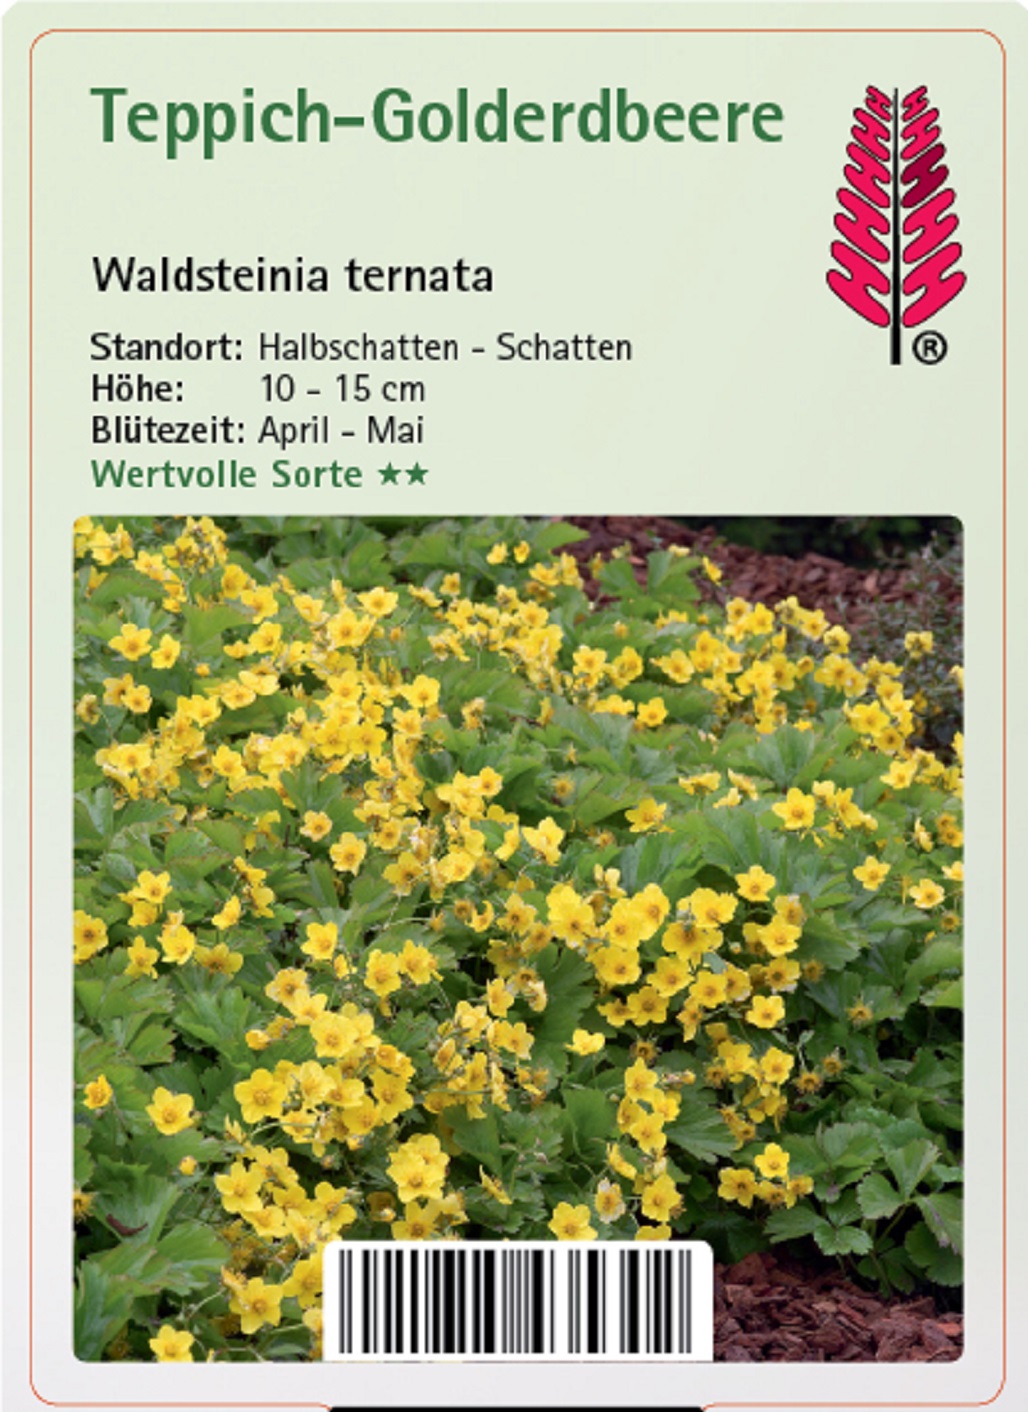 Teppich-Golderdbeere - Waldsteinia ternata, 9cm Topf